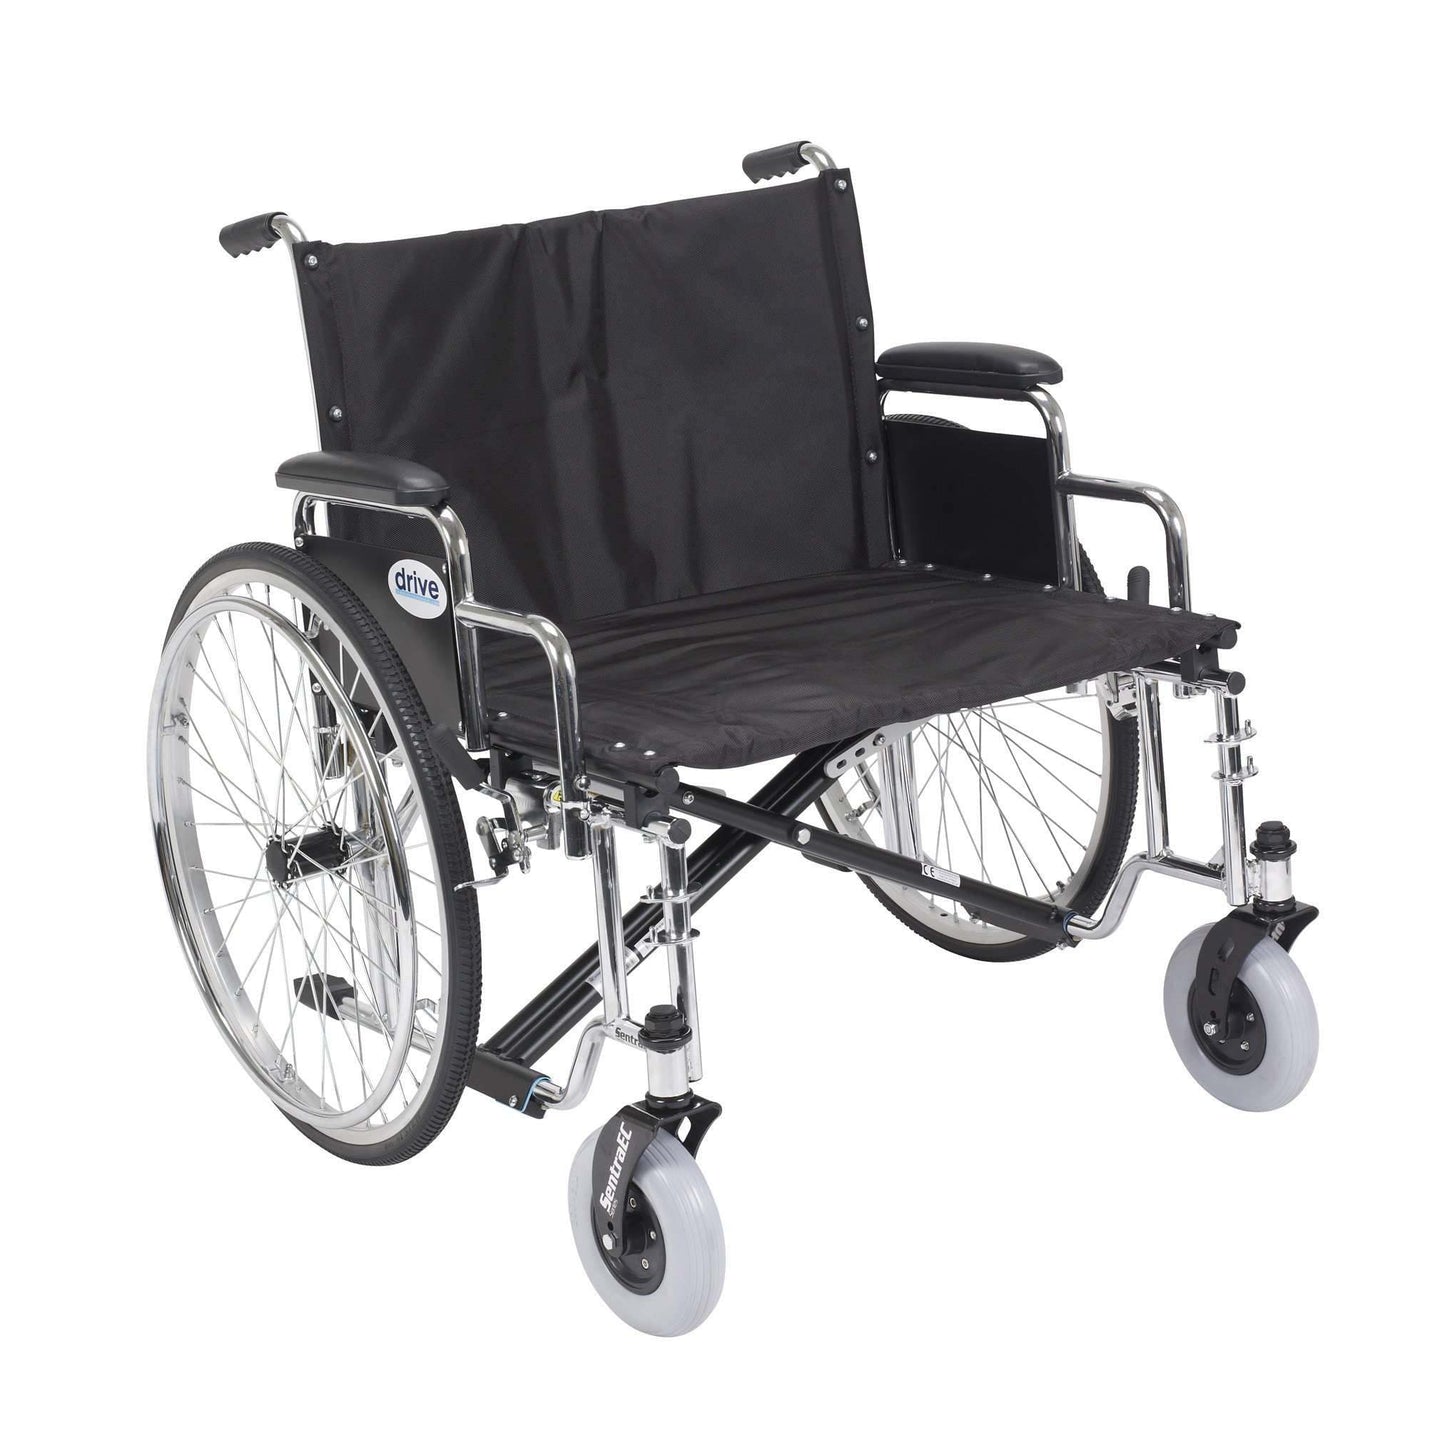 Drive std26ecdda Sentra EC Heavy Duty Extra Wide Wheelchair, Detachable Desk Arms, 26" Seat